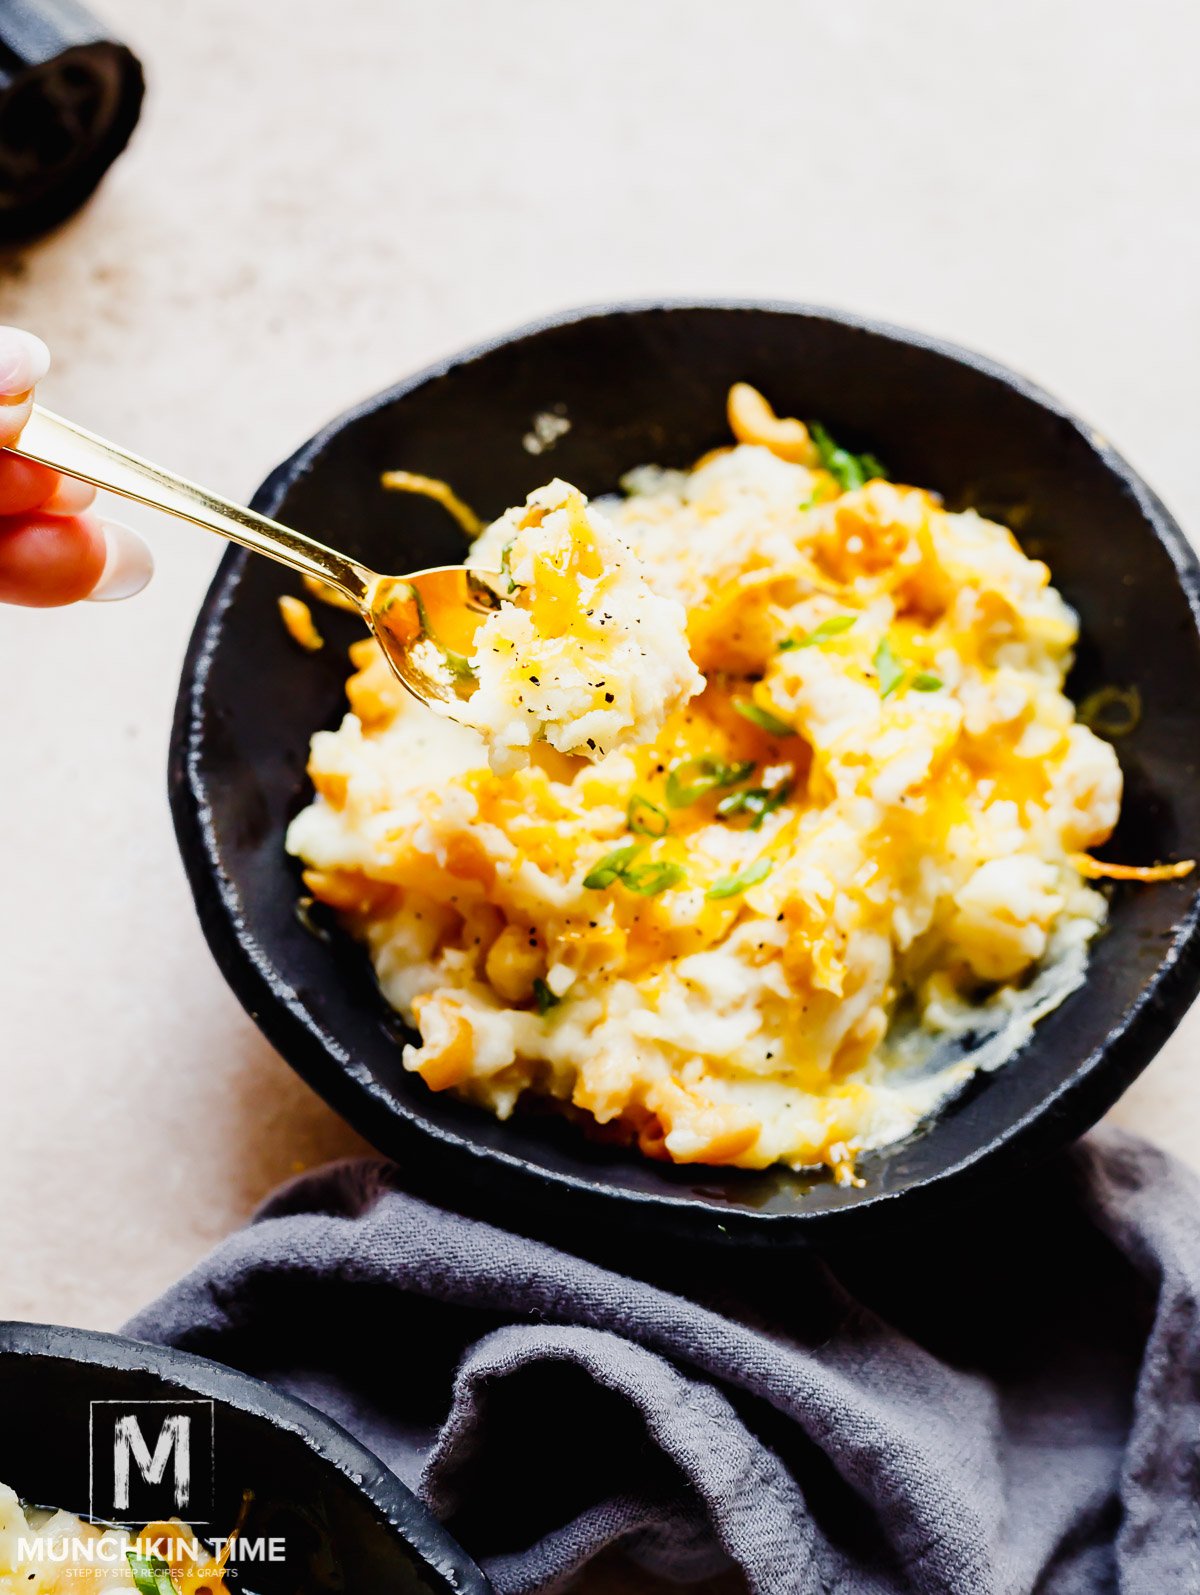 Mashed Potatoes & Macaroni - Munchkin Time